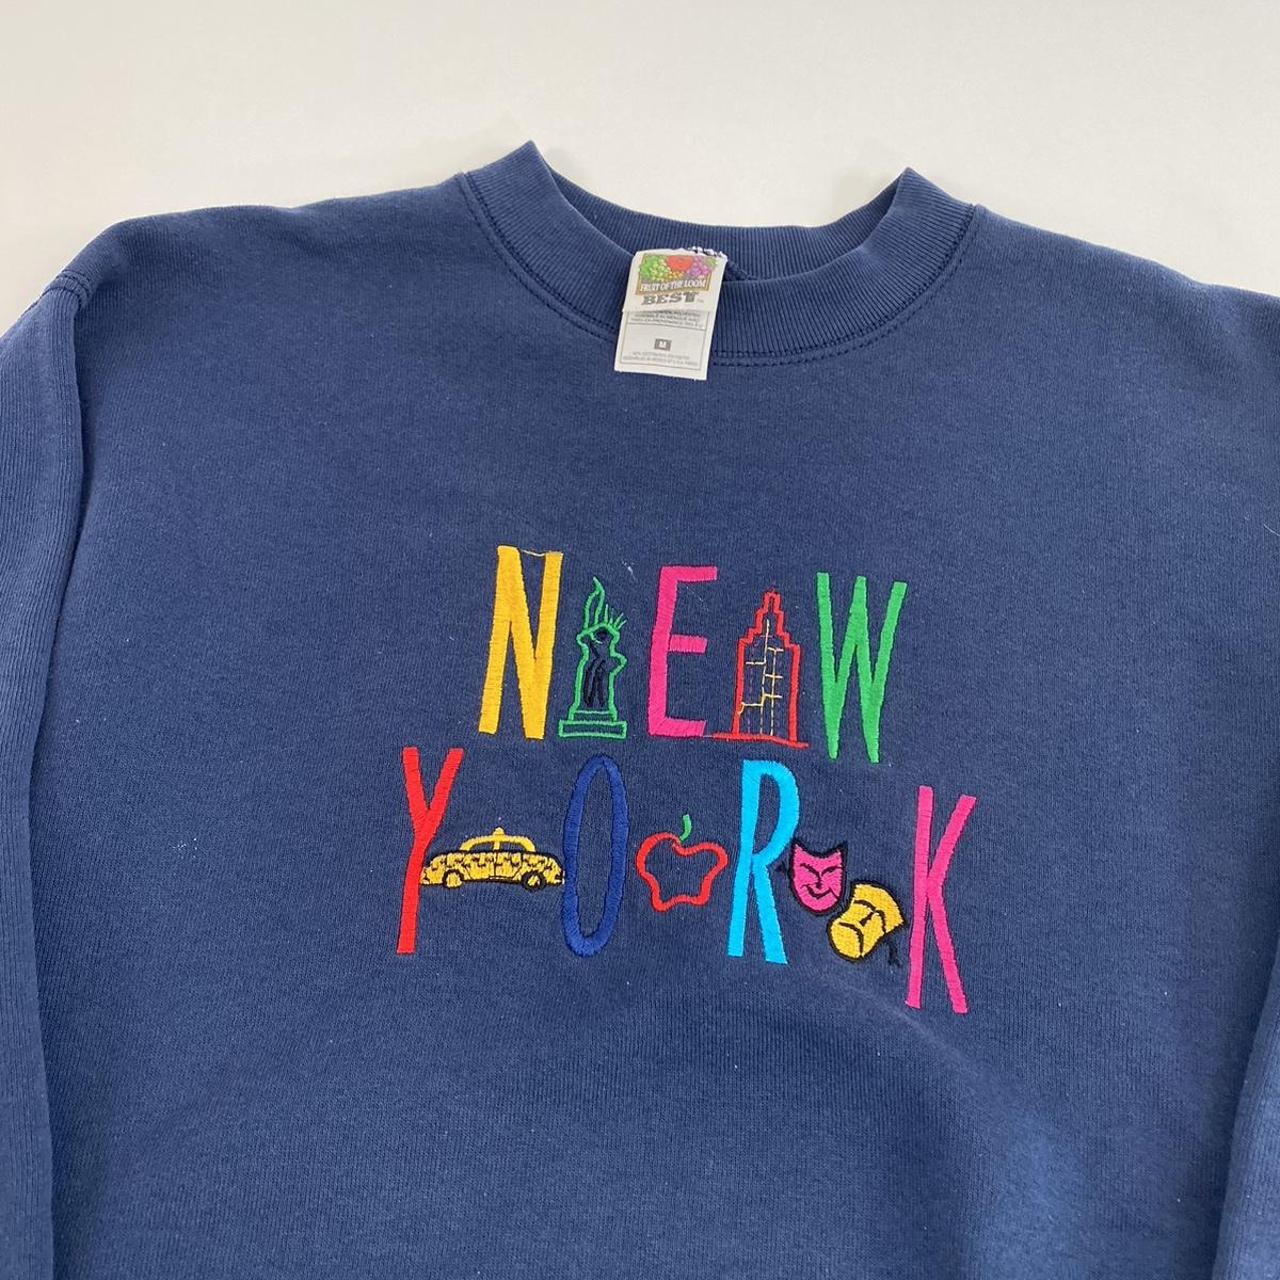 Retro New York crewneck Fun colorful embroidery! On - Depop